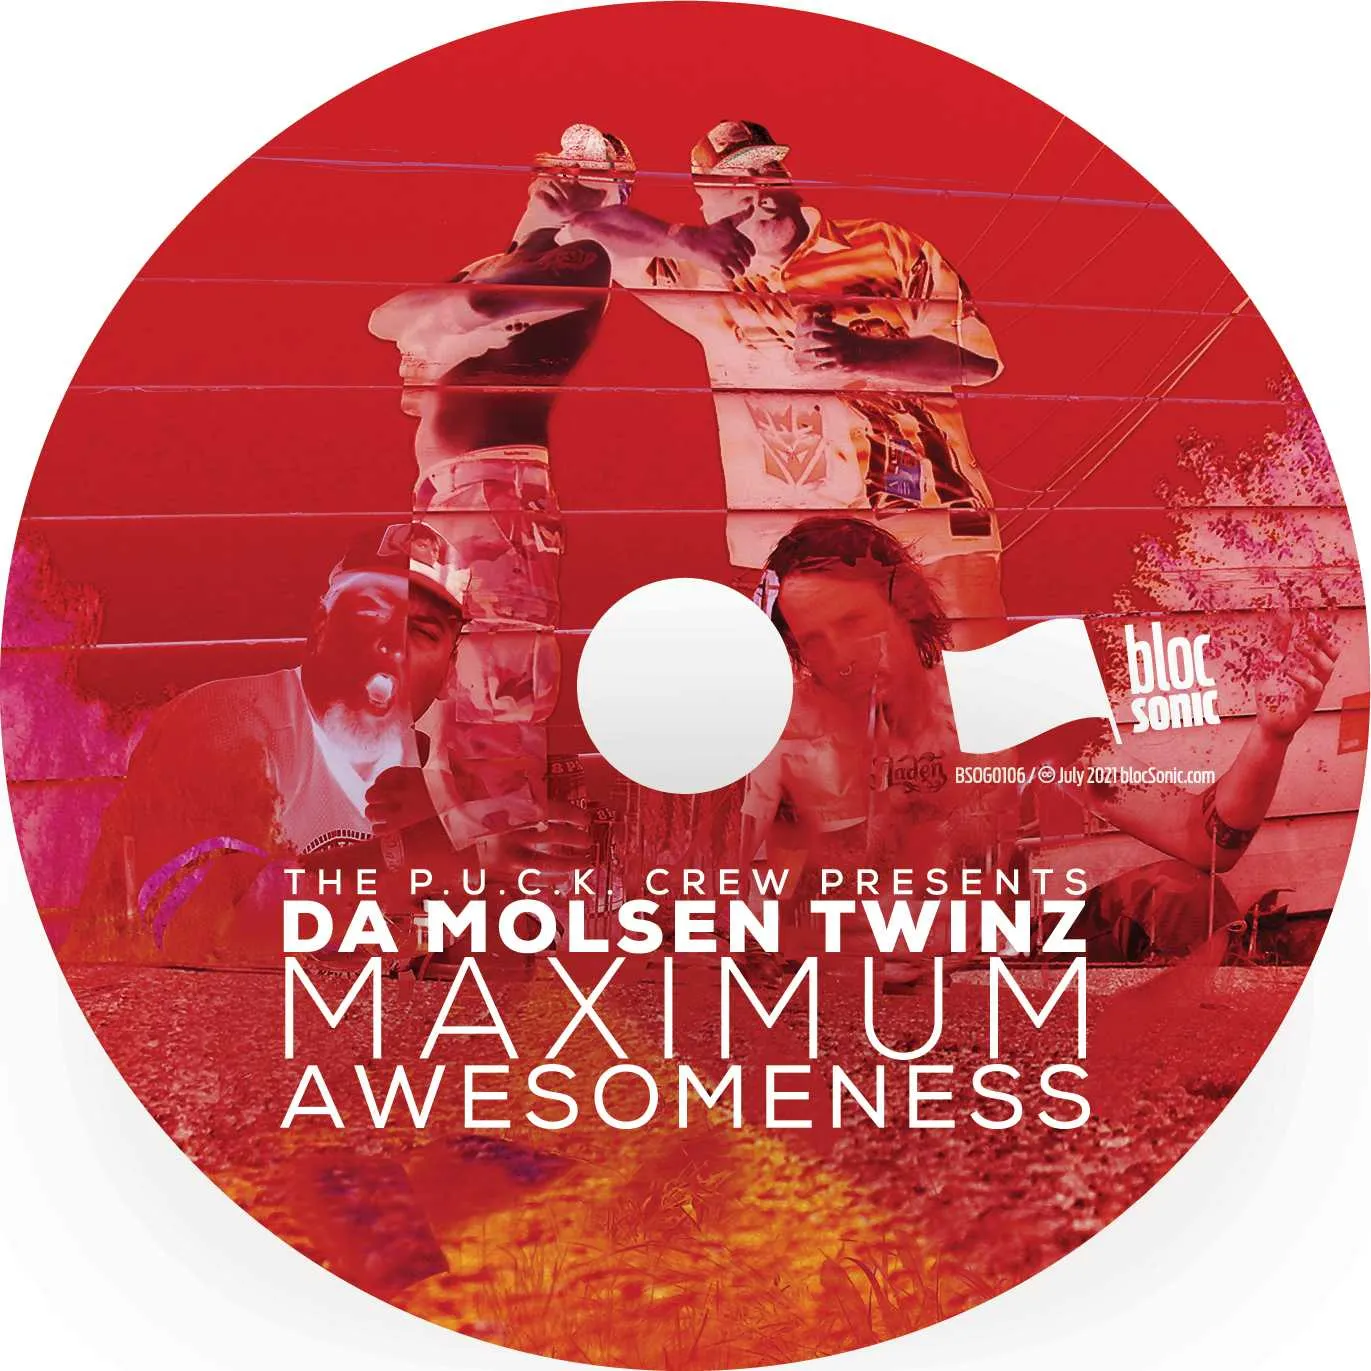 Album disc for “P.U.C.K. Presents Da Molsen Twinz: Maximum Awesomeness” by P.U.C.K.